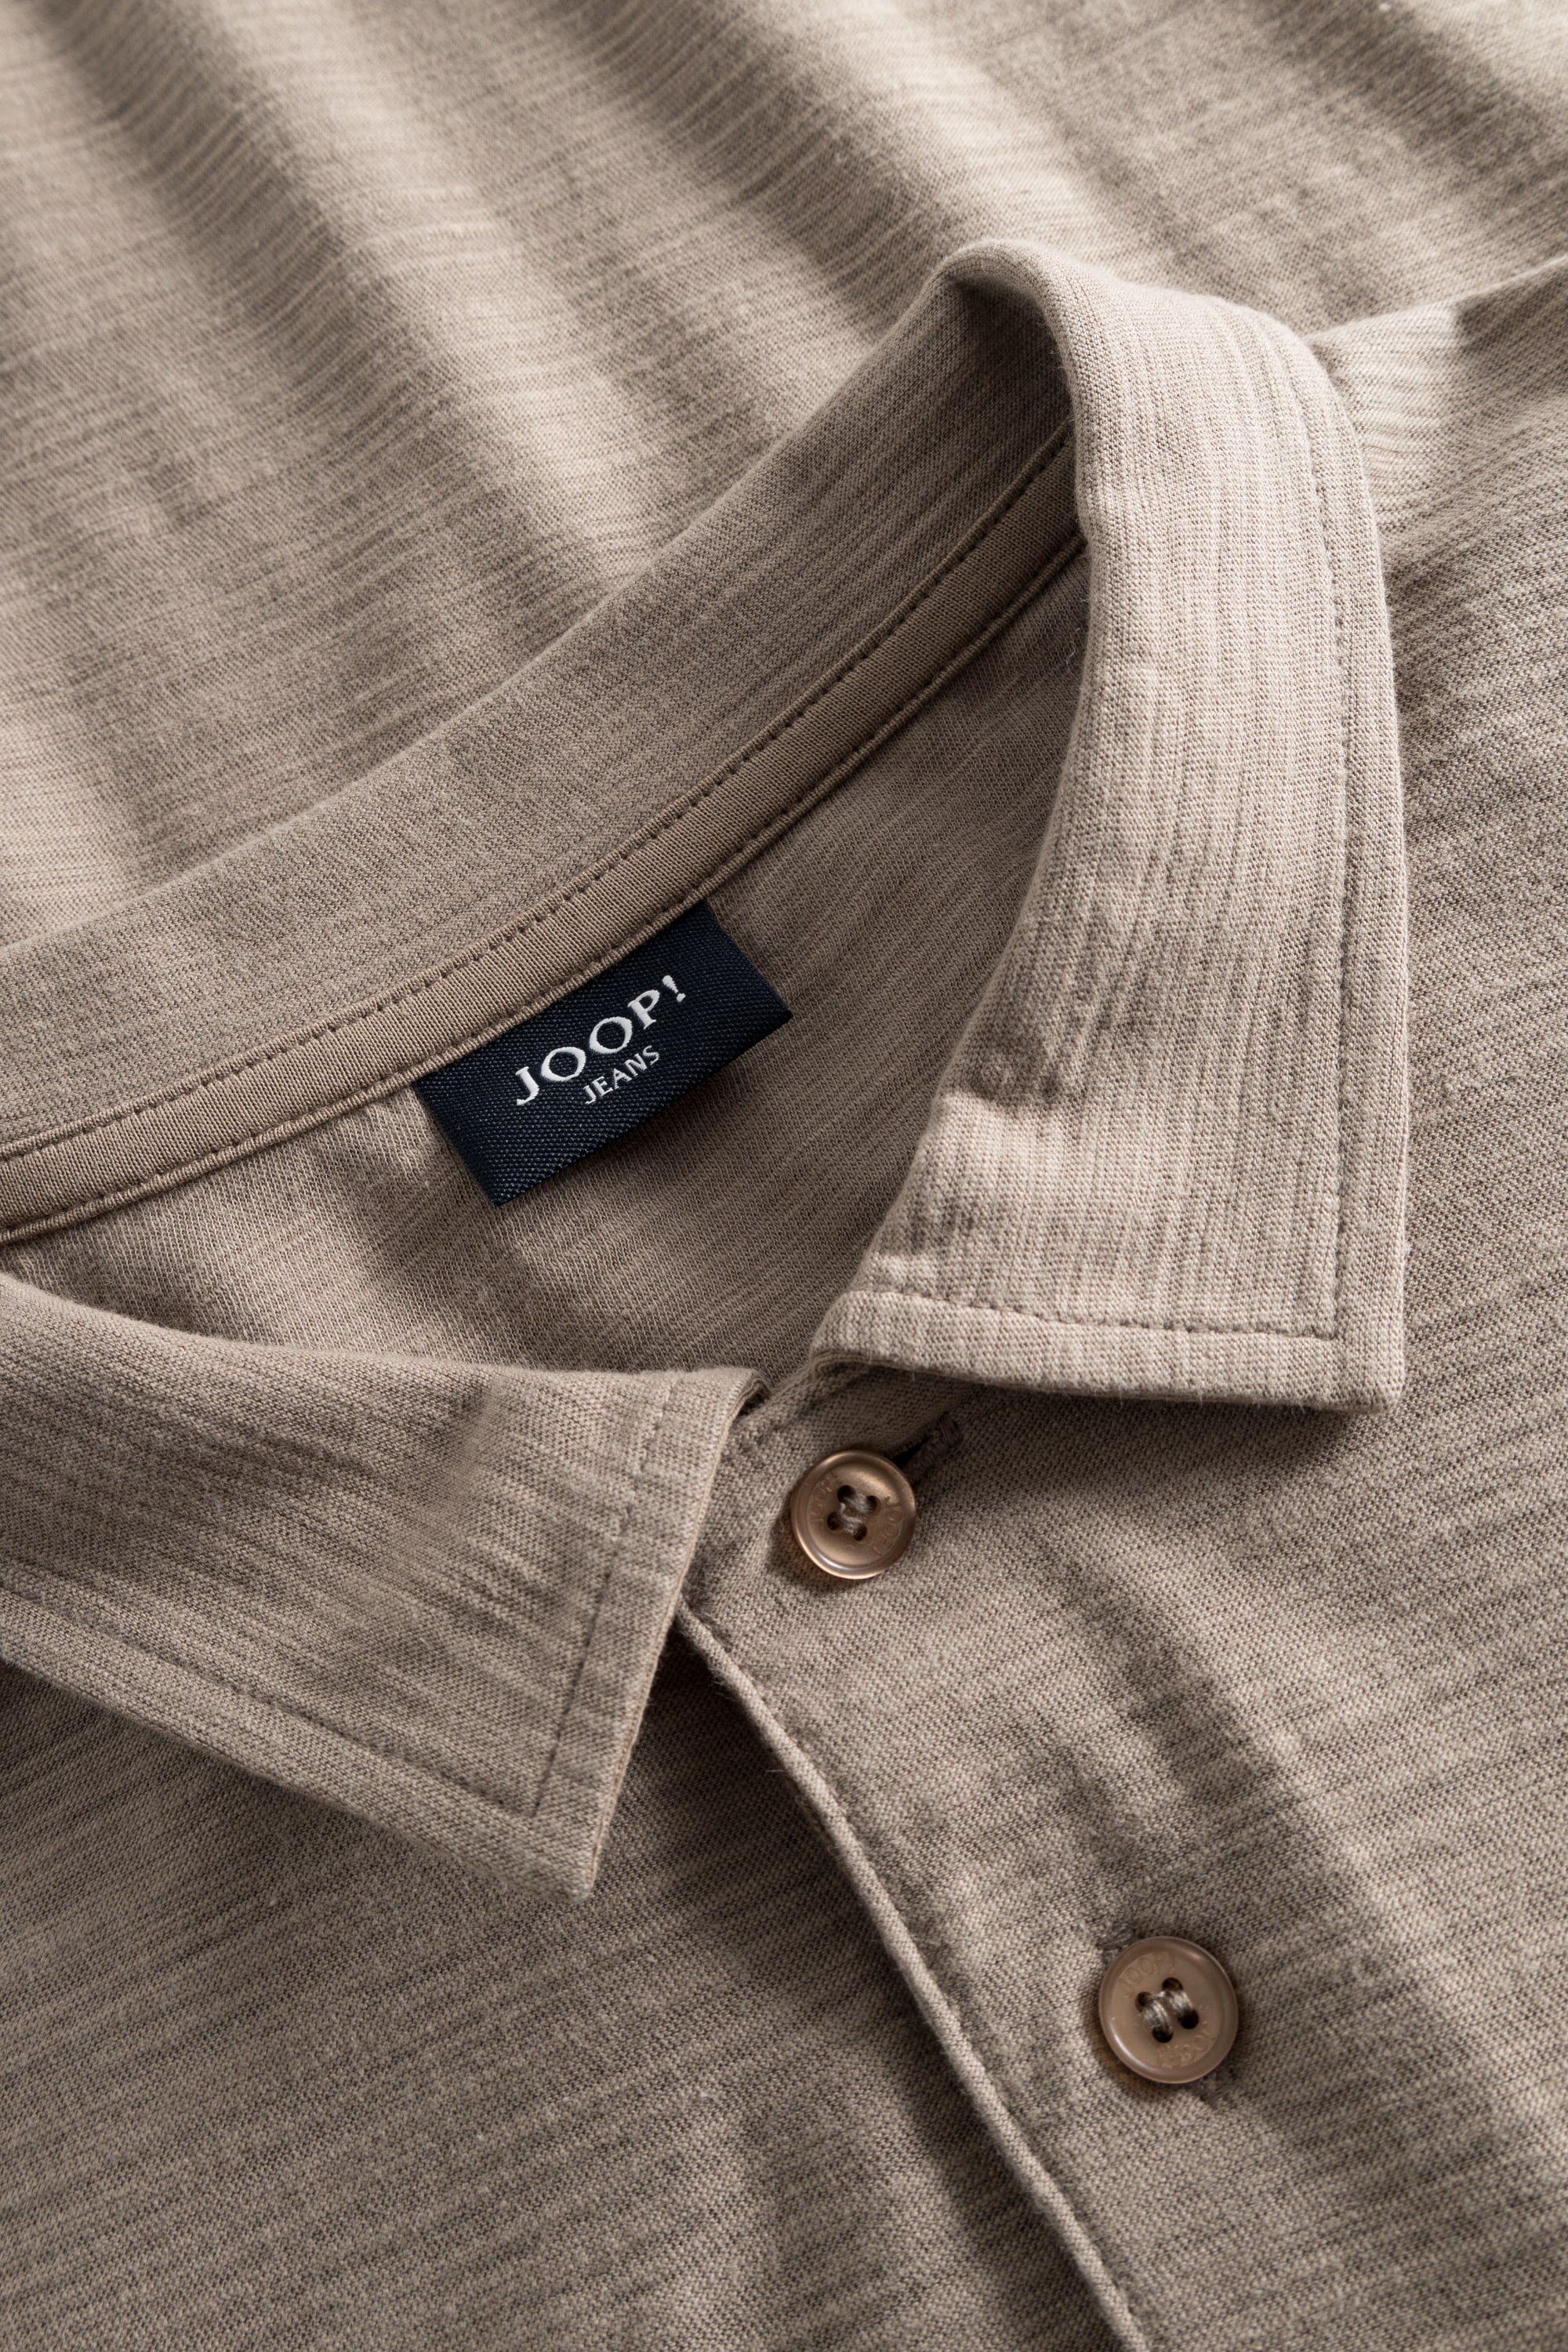 Joop Jeans Poloshirt »Alanas«, aus fein strukturierter Qualität